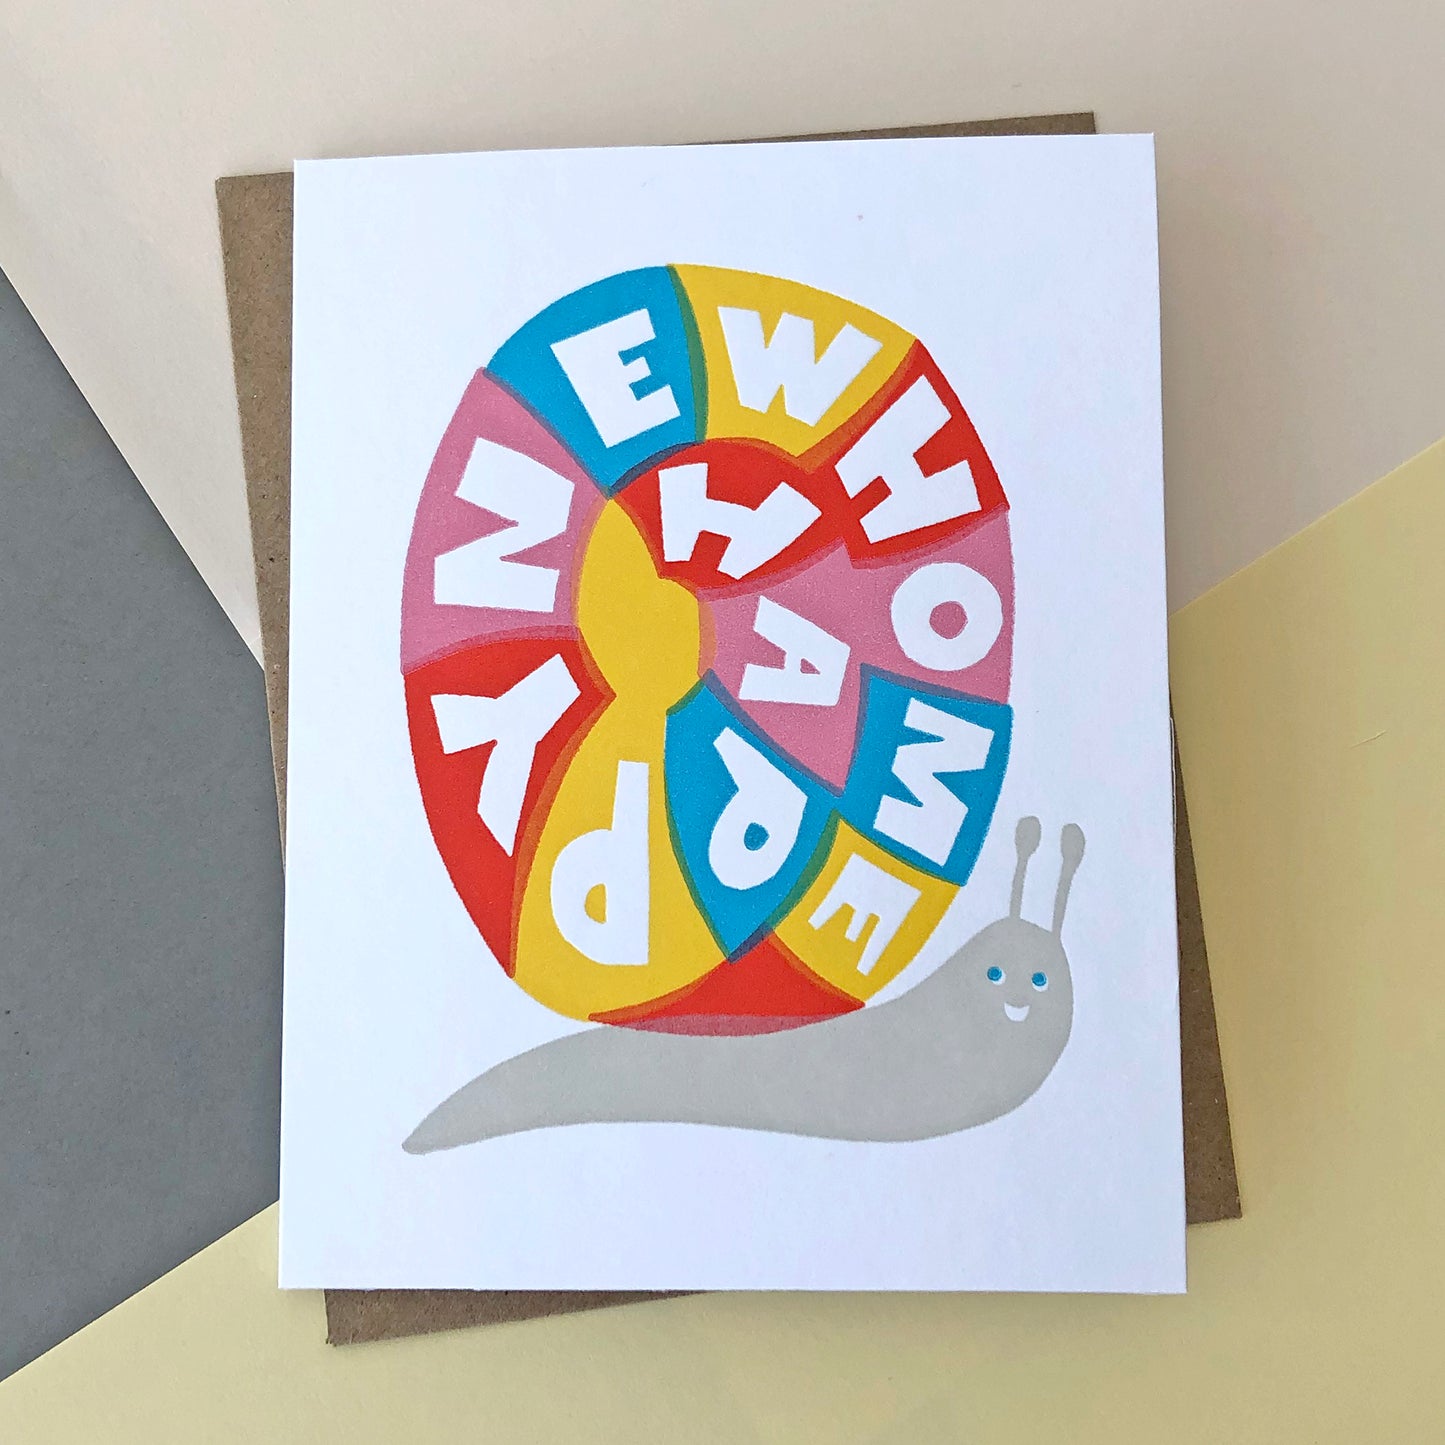 Happy New Home Letterpress Card - Sukie